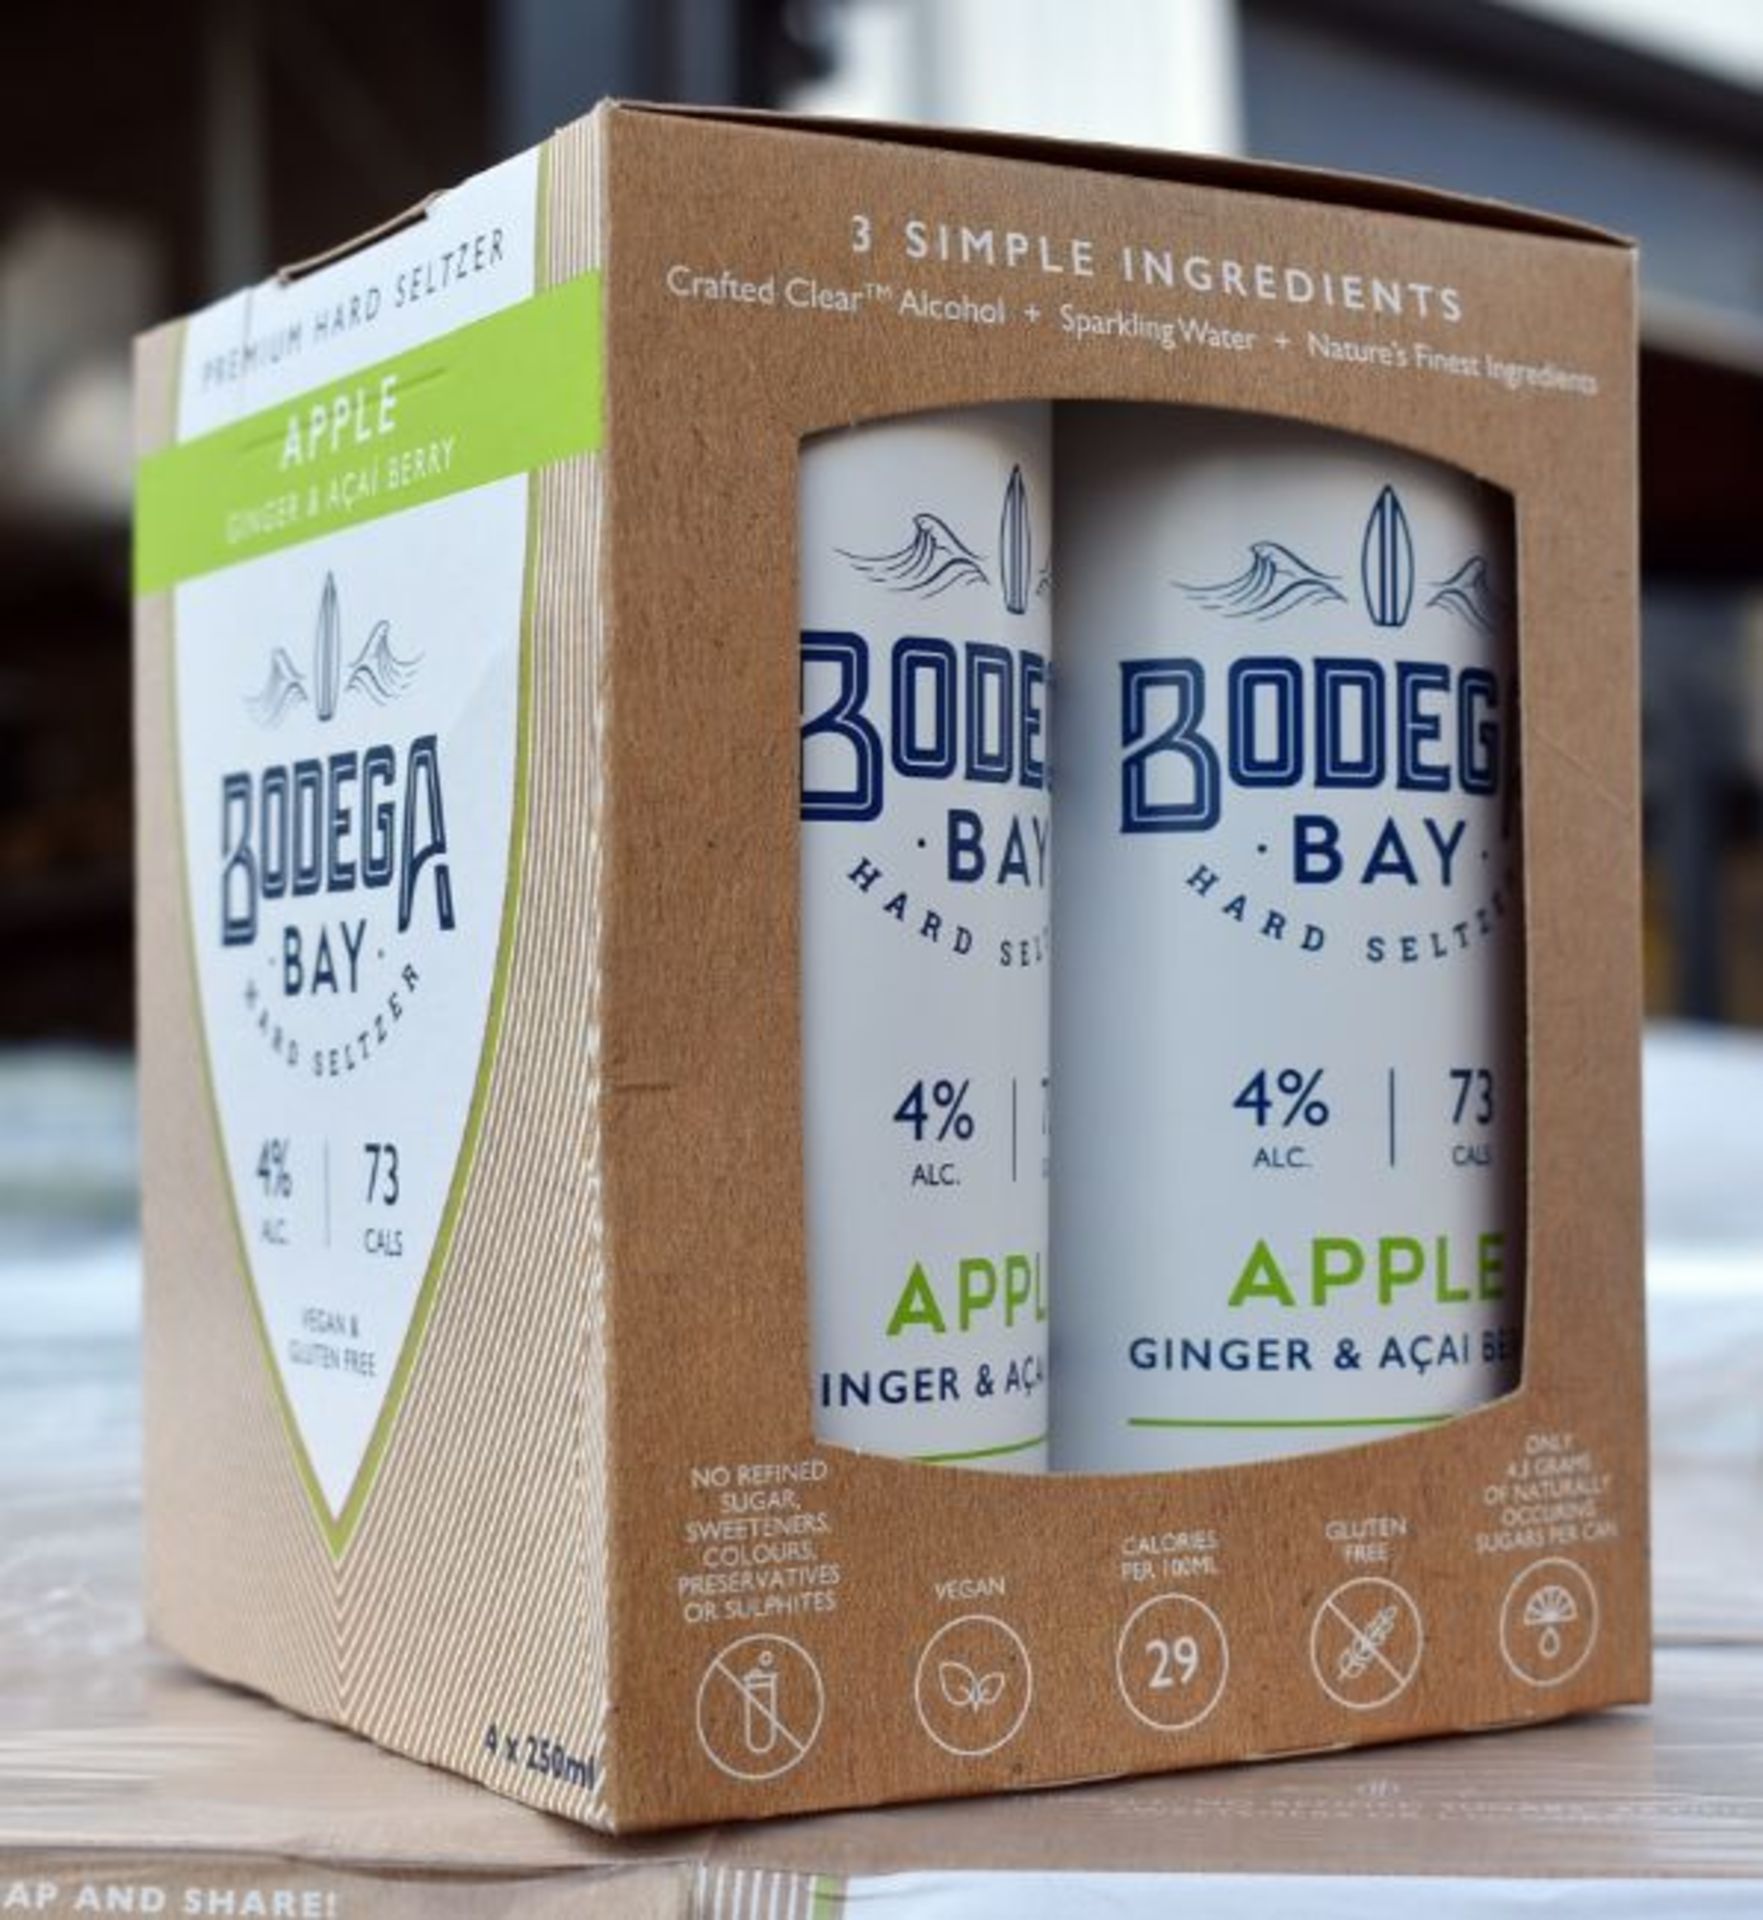 24 x Bodega Bay Hard Seltzer 250ml Alcoholic Sparkling Water Drinks - Apple Ginger & Acai Berry - Image 5 of 9